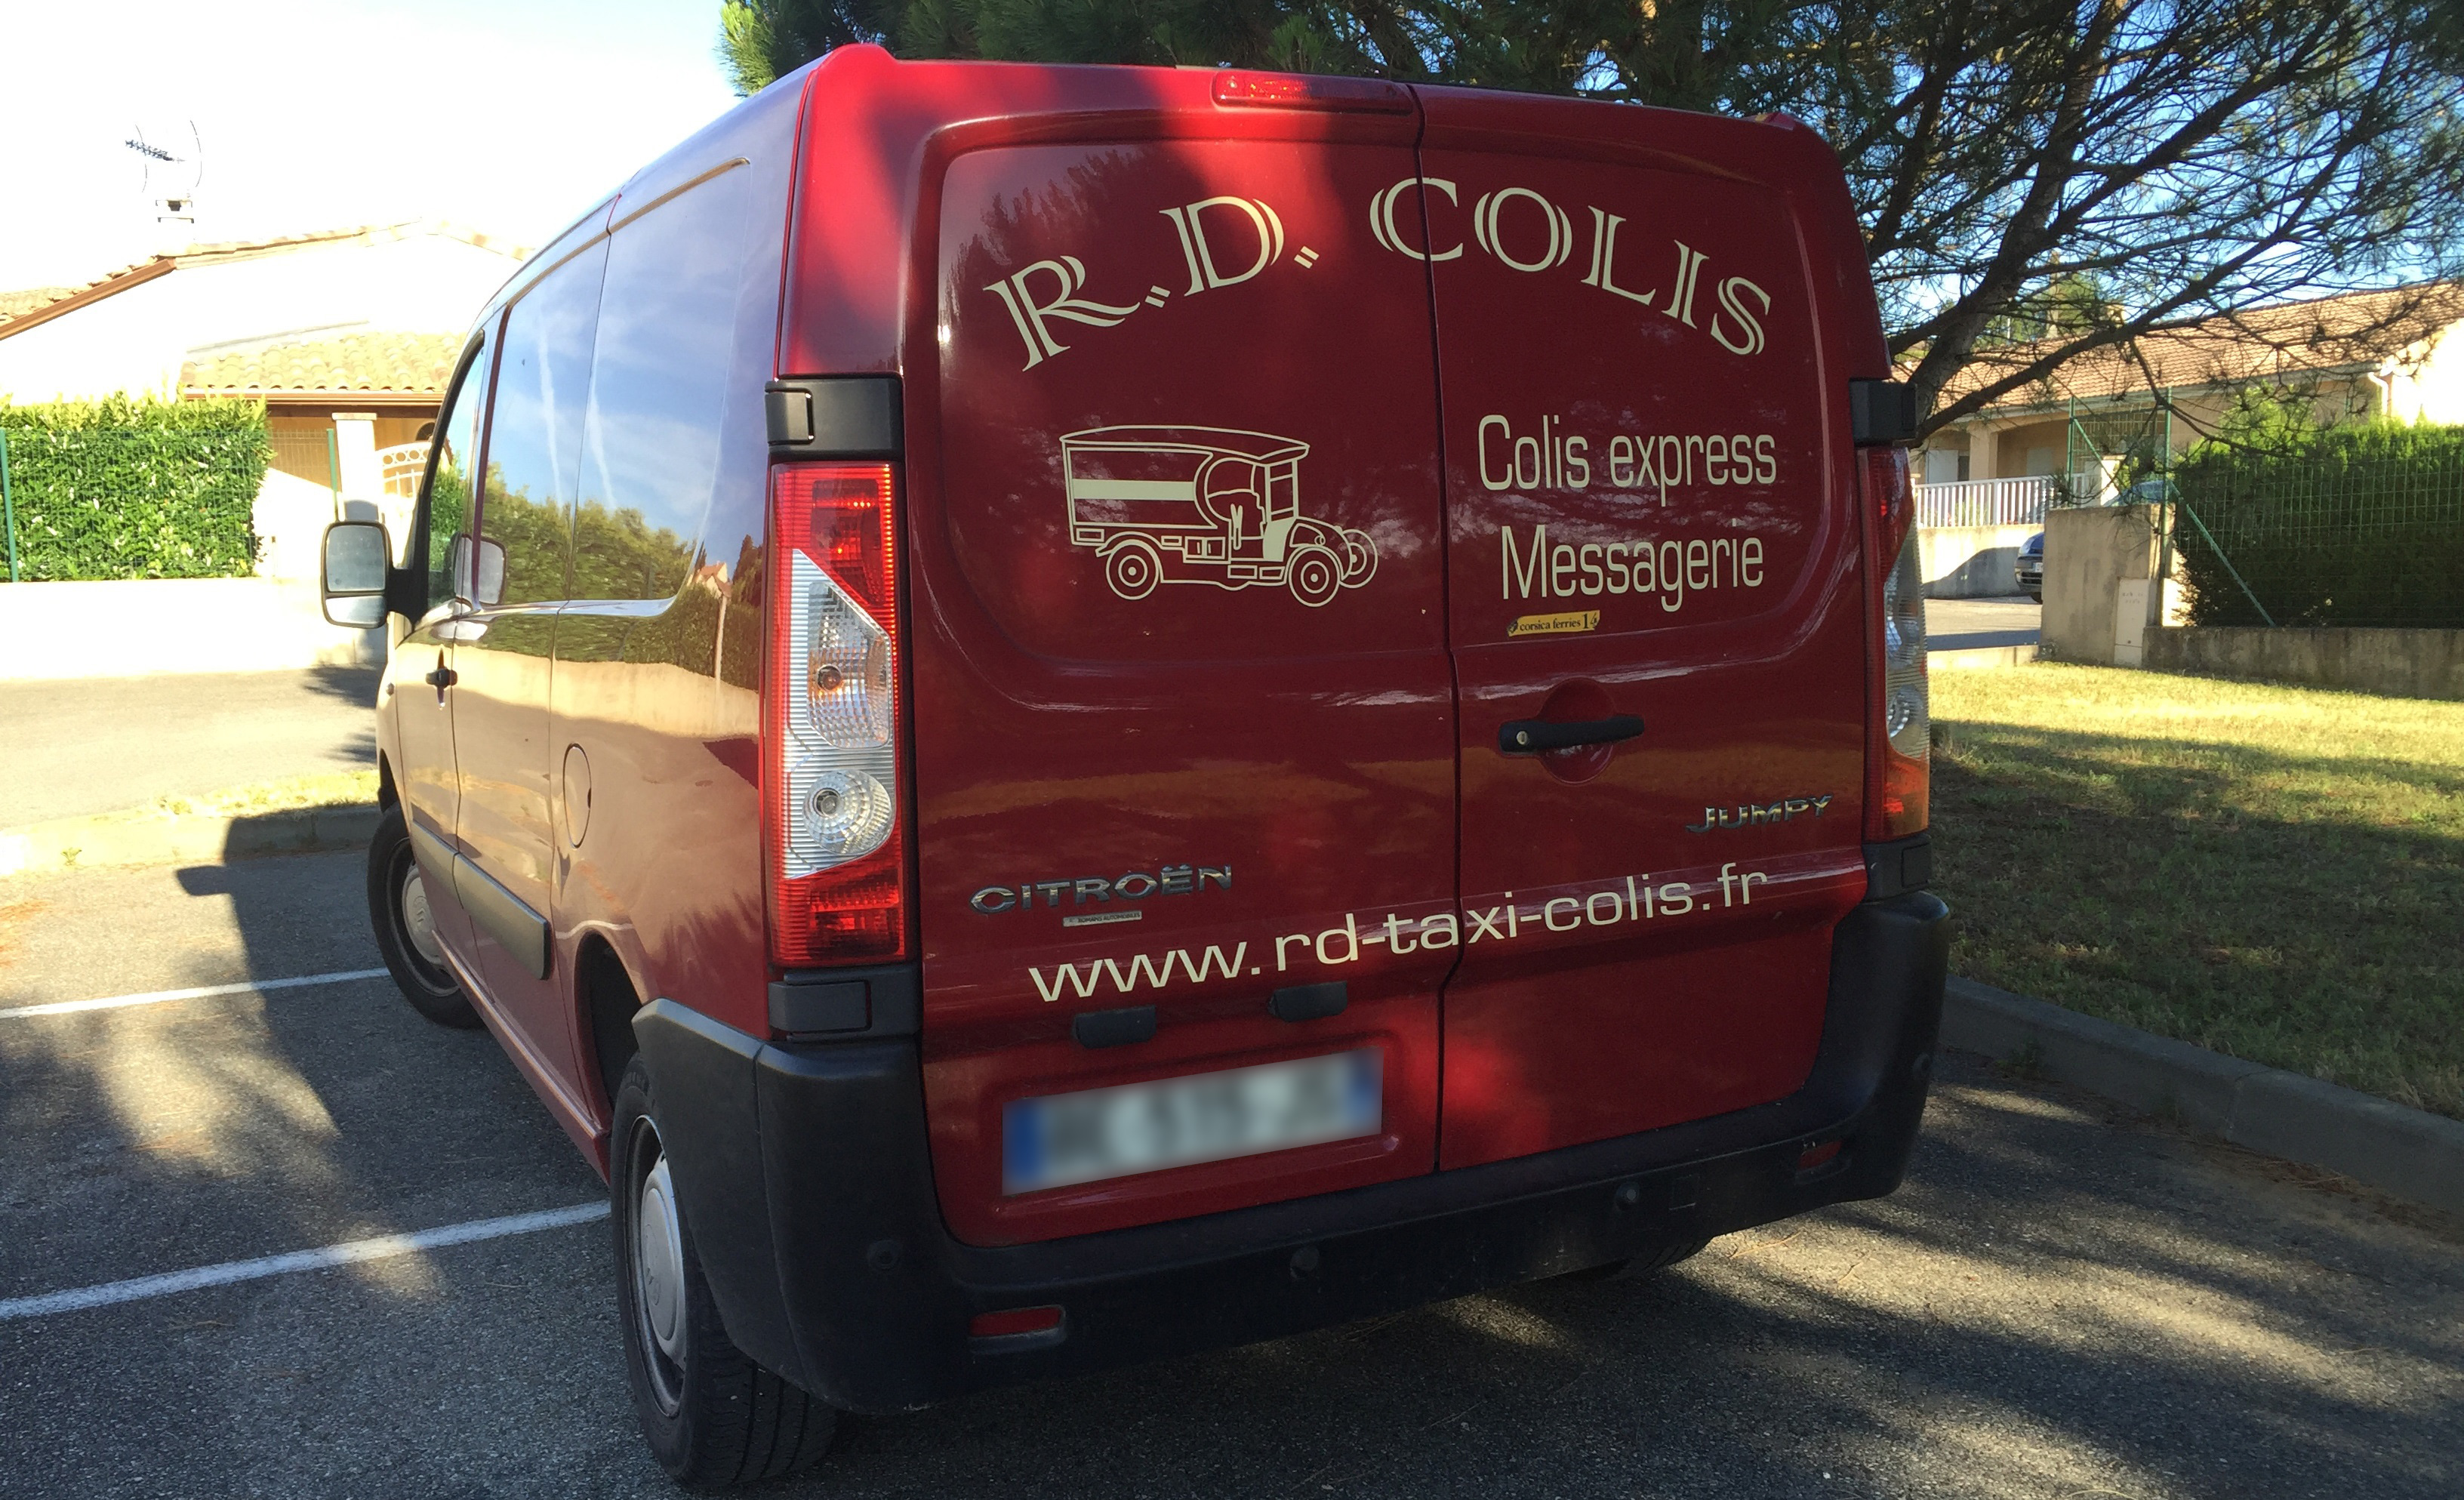 RD Colis transport express Drôme 26, Valence